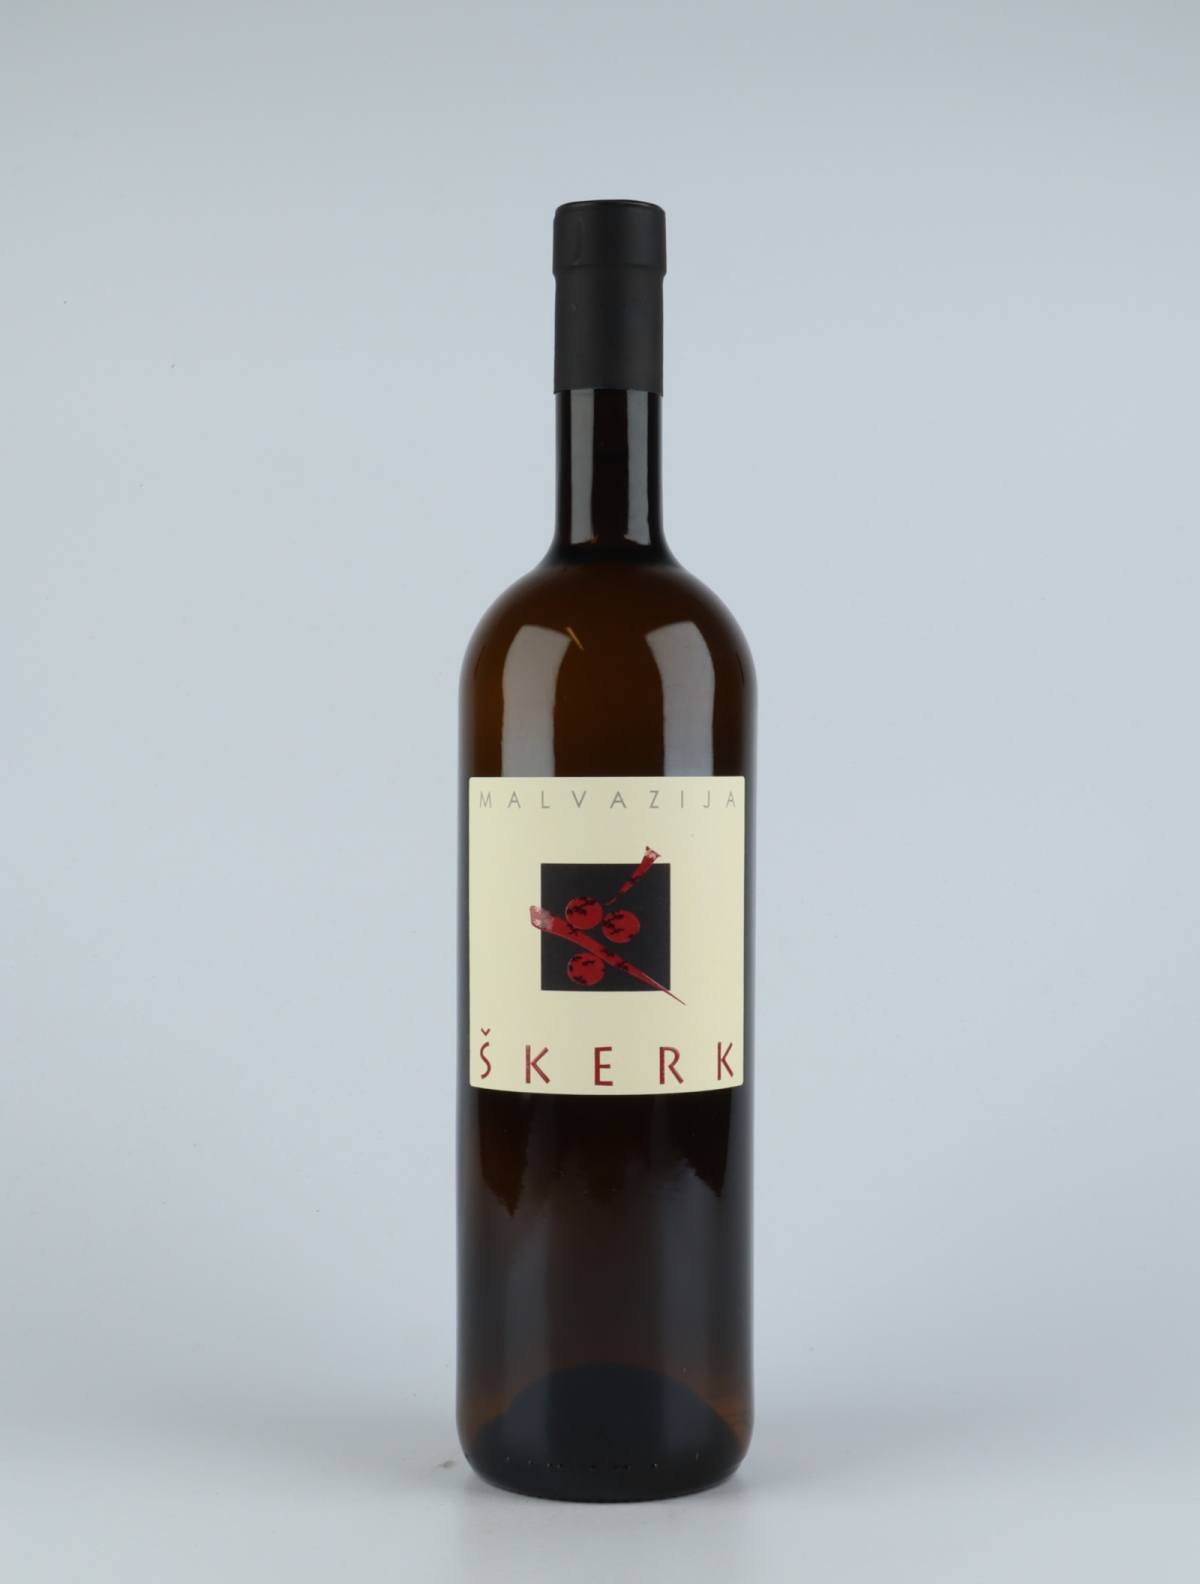 A bottle 2018 Malvazija Orange wine from Skerk, Friuli in Italy